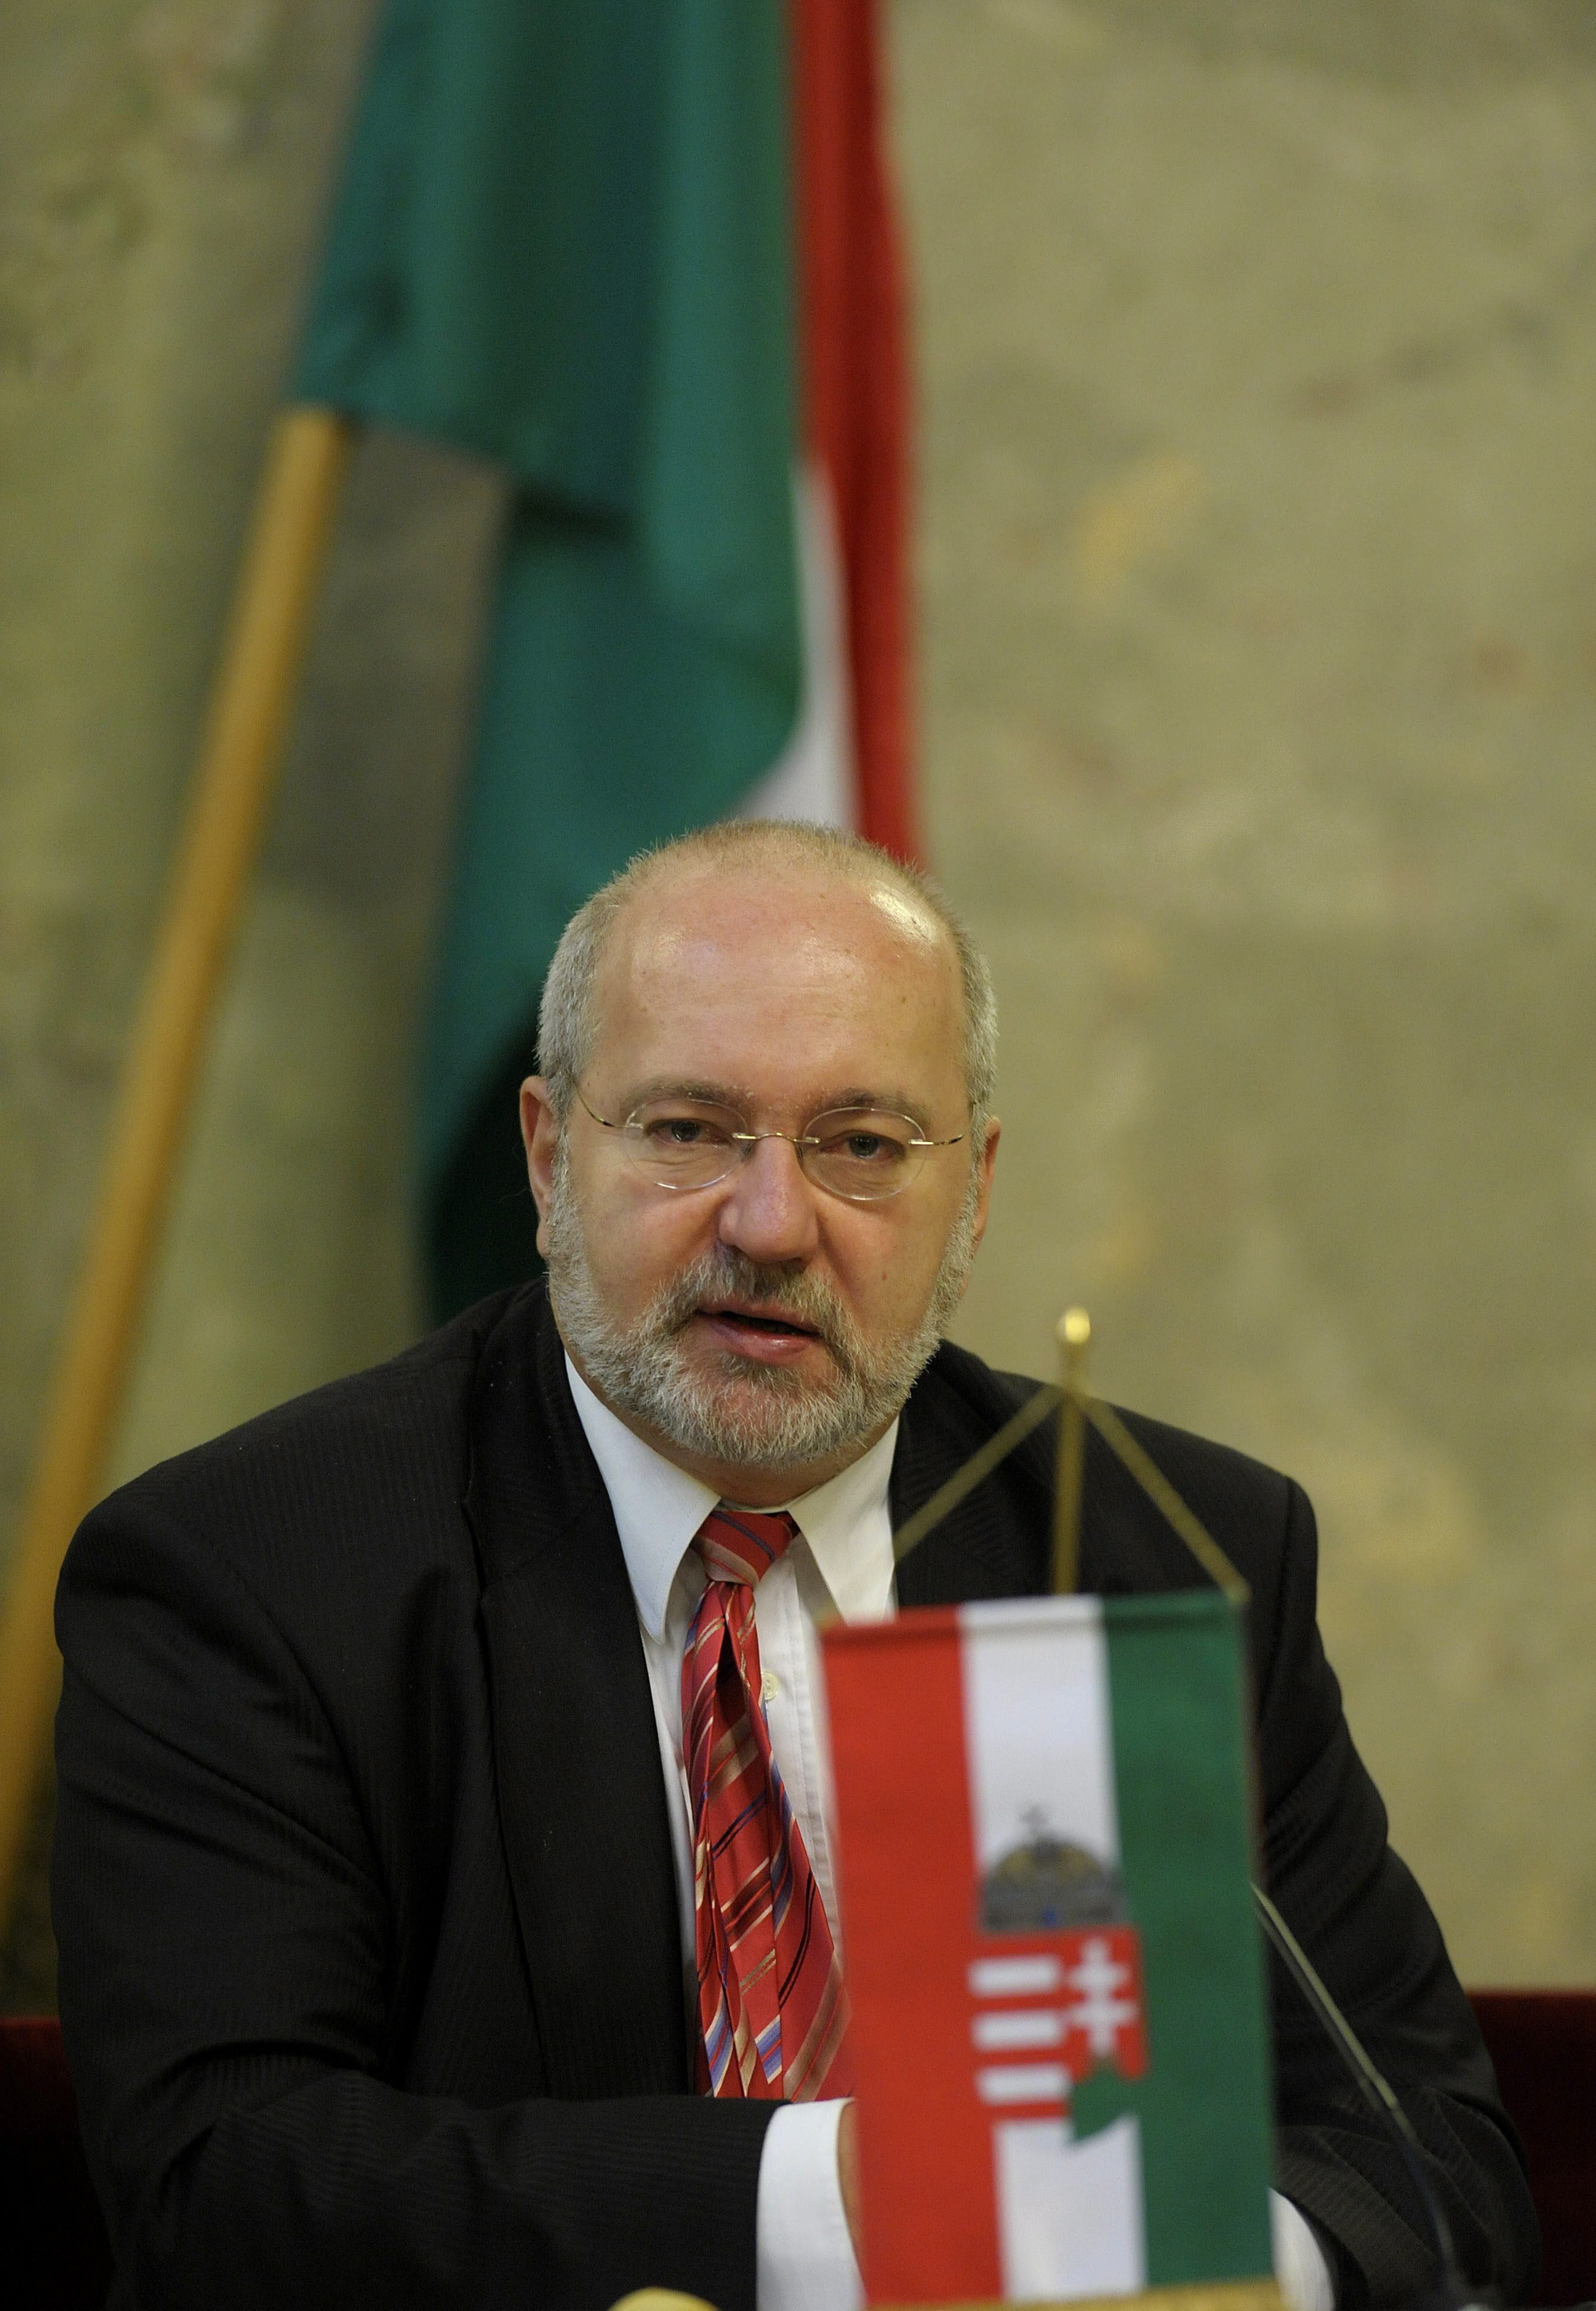 Der liberale ungarische Politiker Matyas Eörsi | EPA